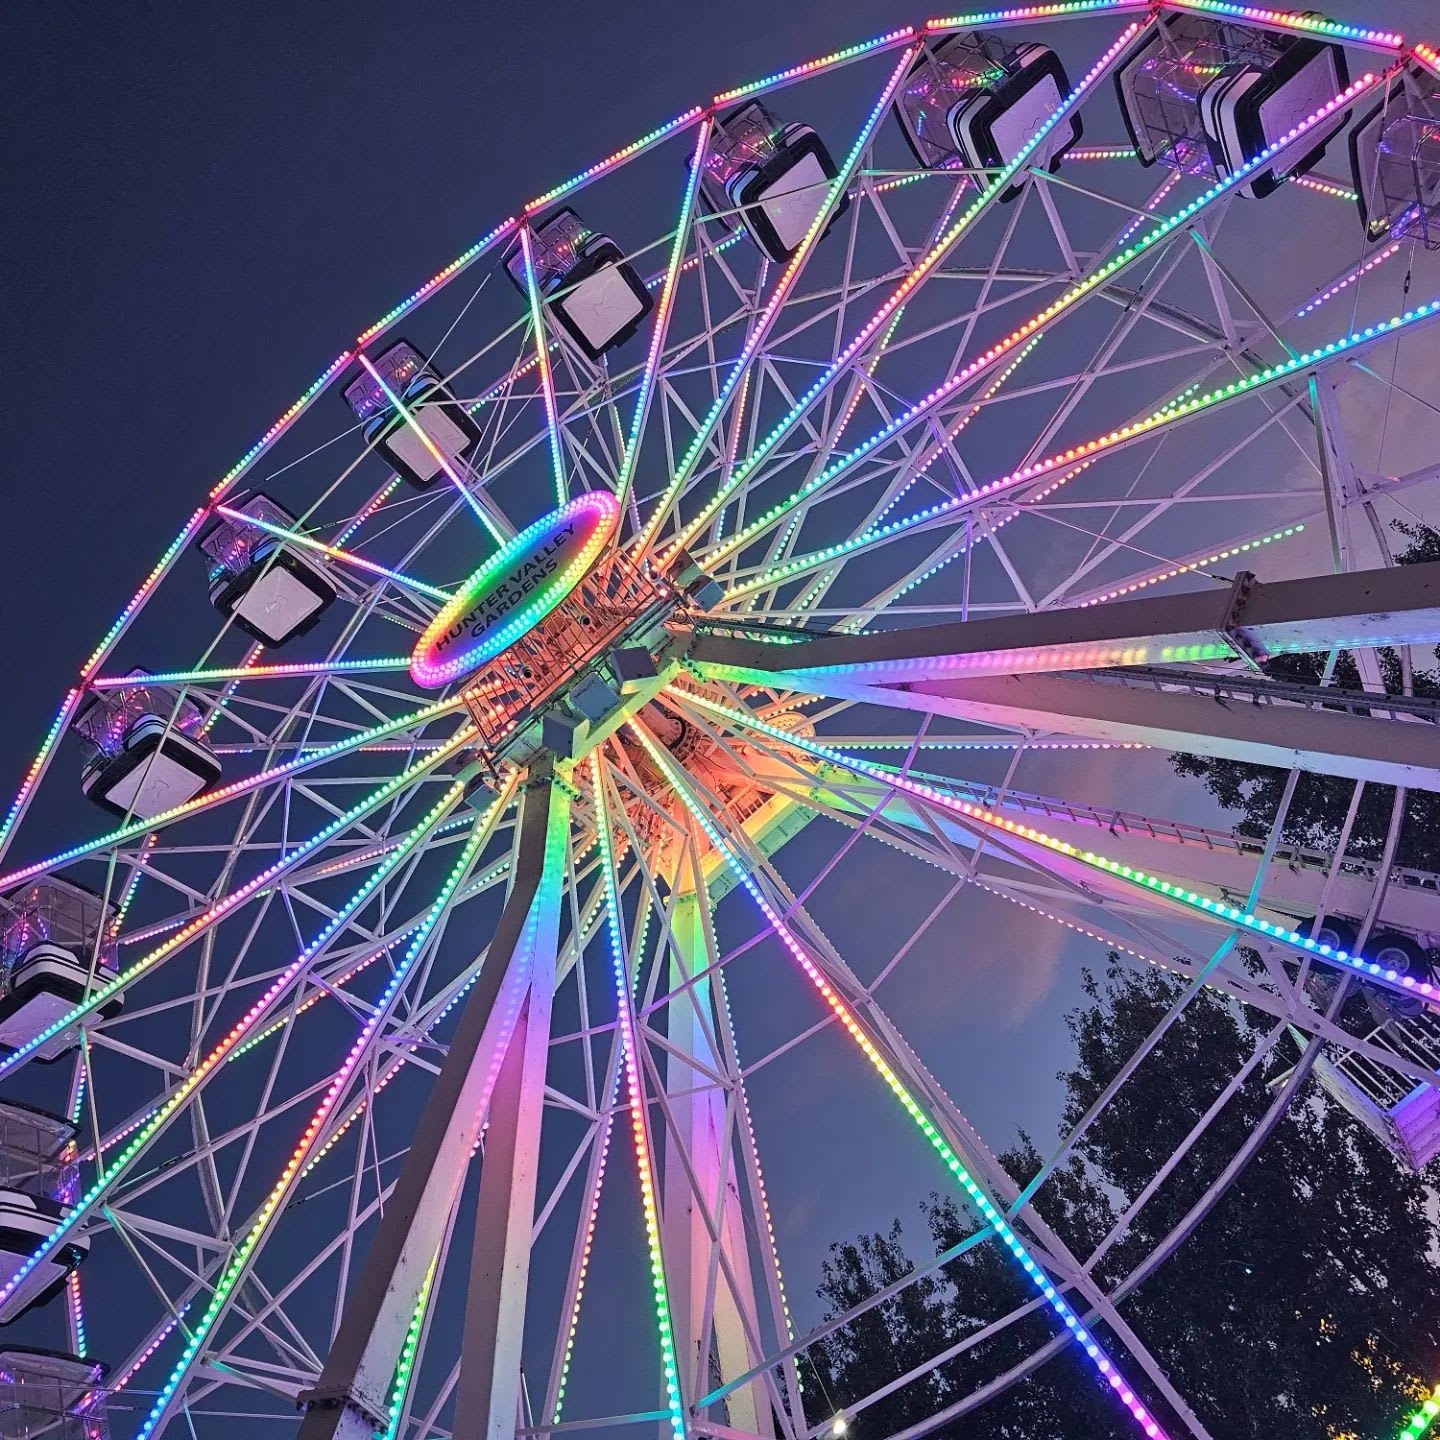 Hunter Valley Gardens - Ferris Wheel